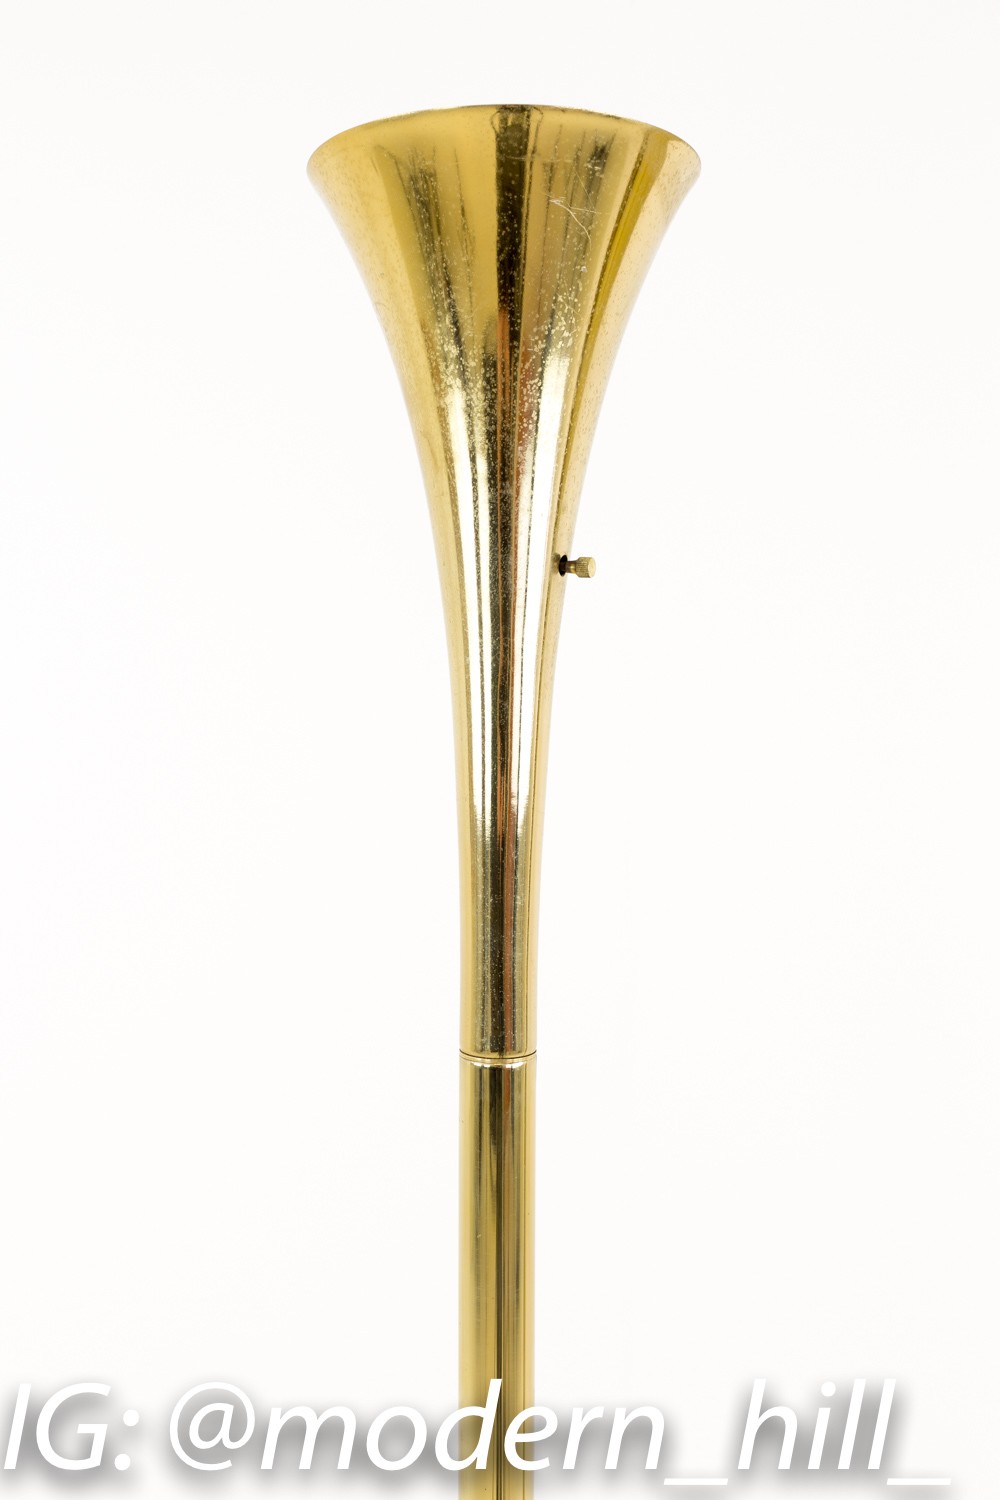 Laurel Art Deco Tourchette Mid Century Modern Floor Lamps in Swedish Brass - Pair